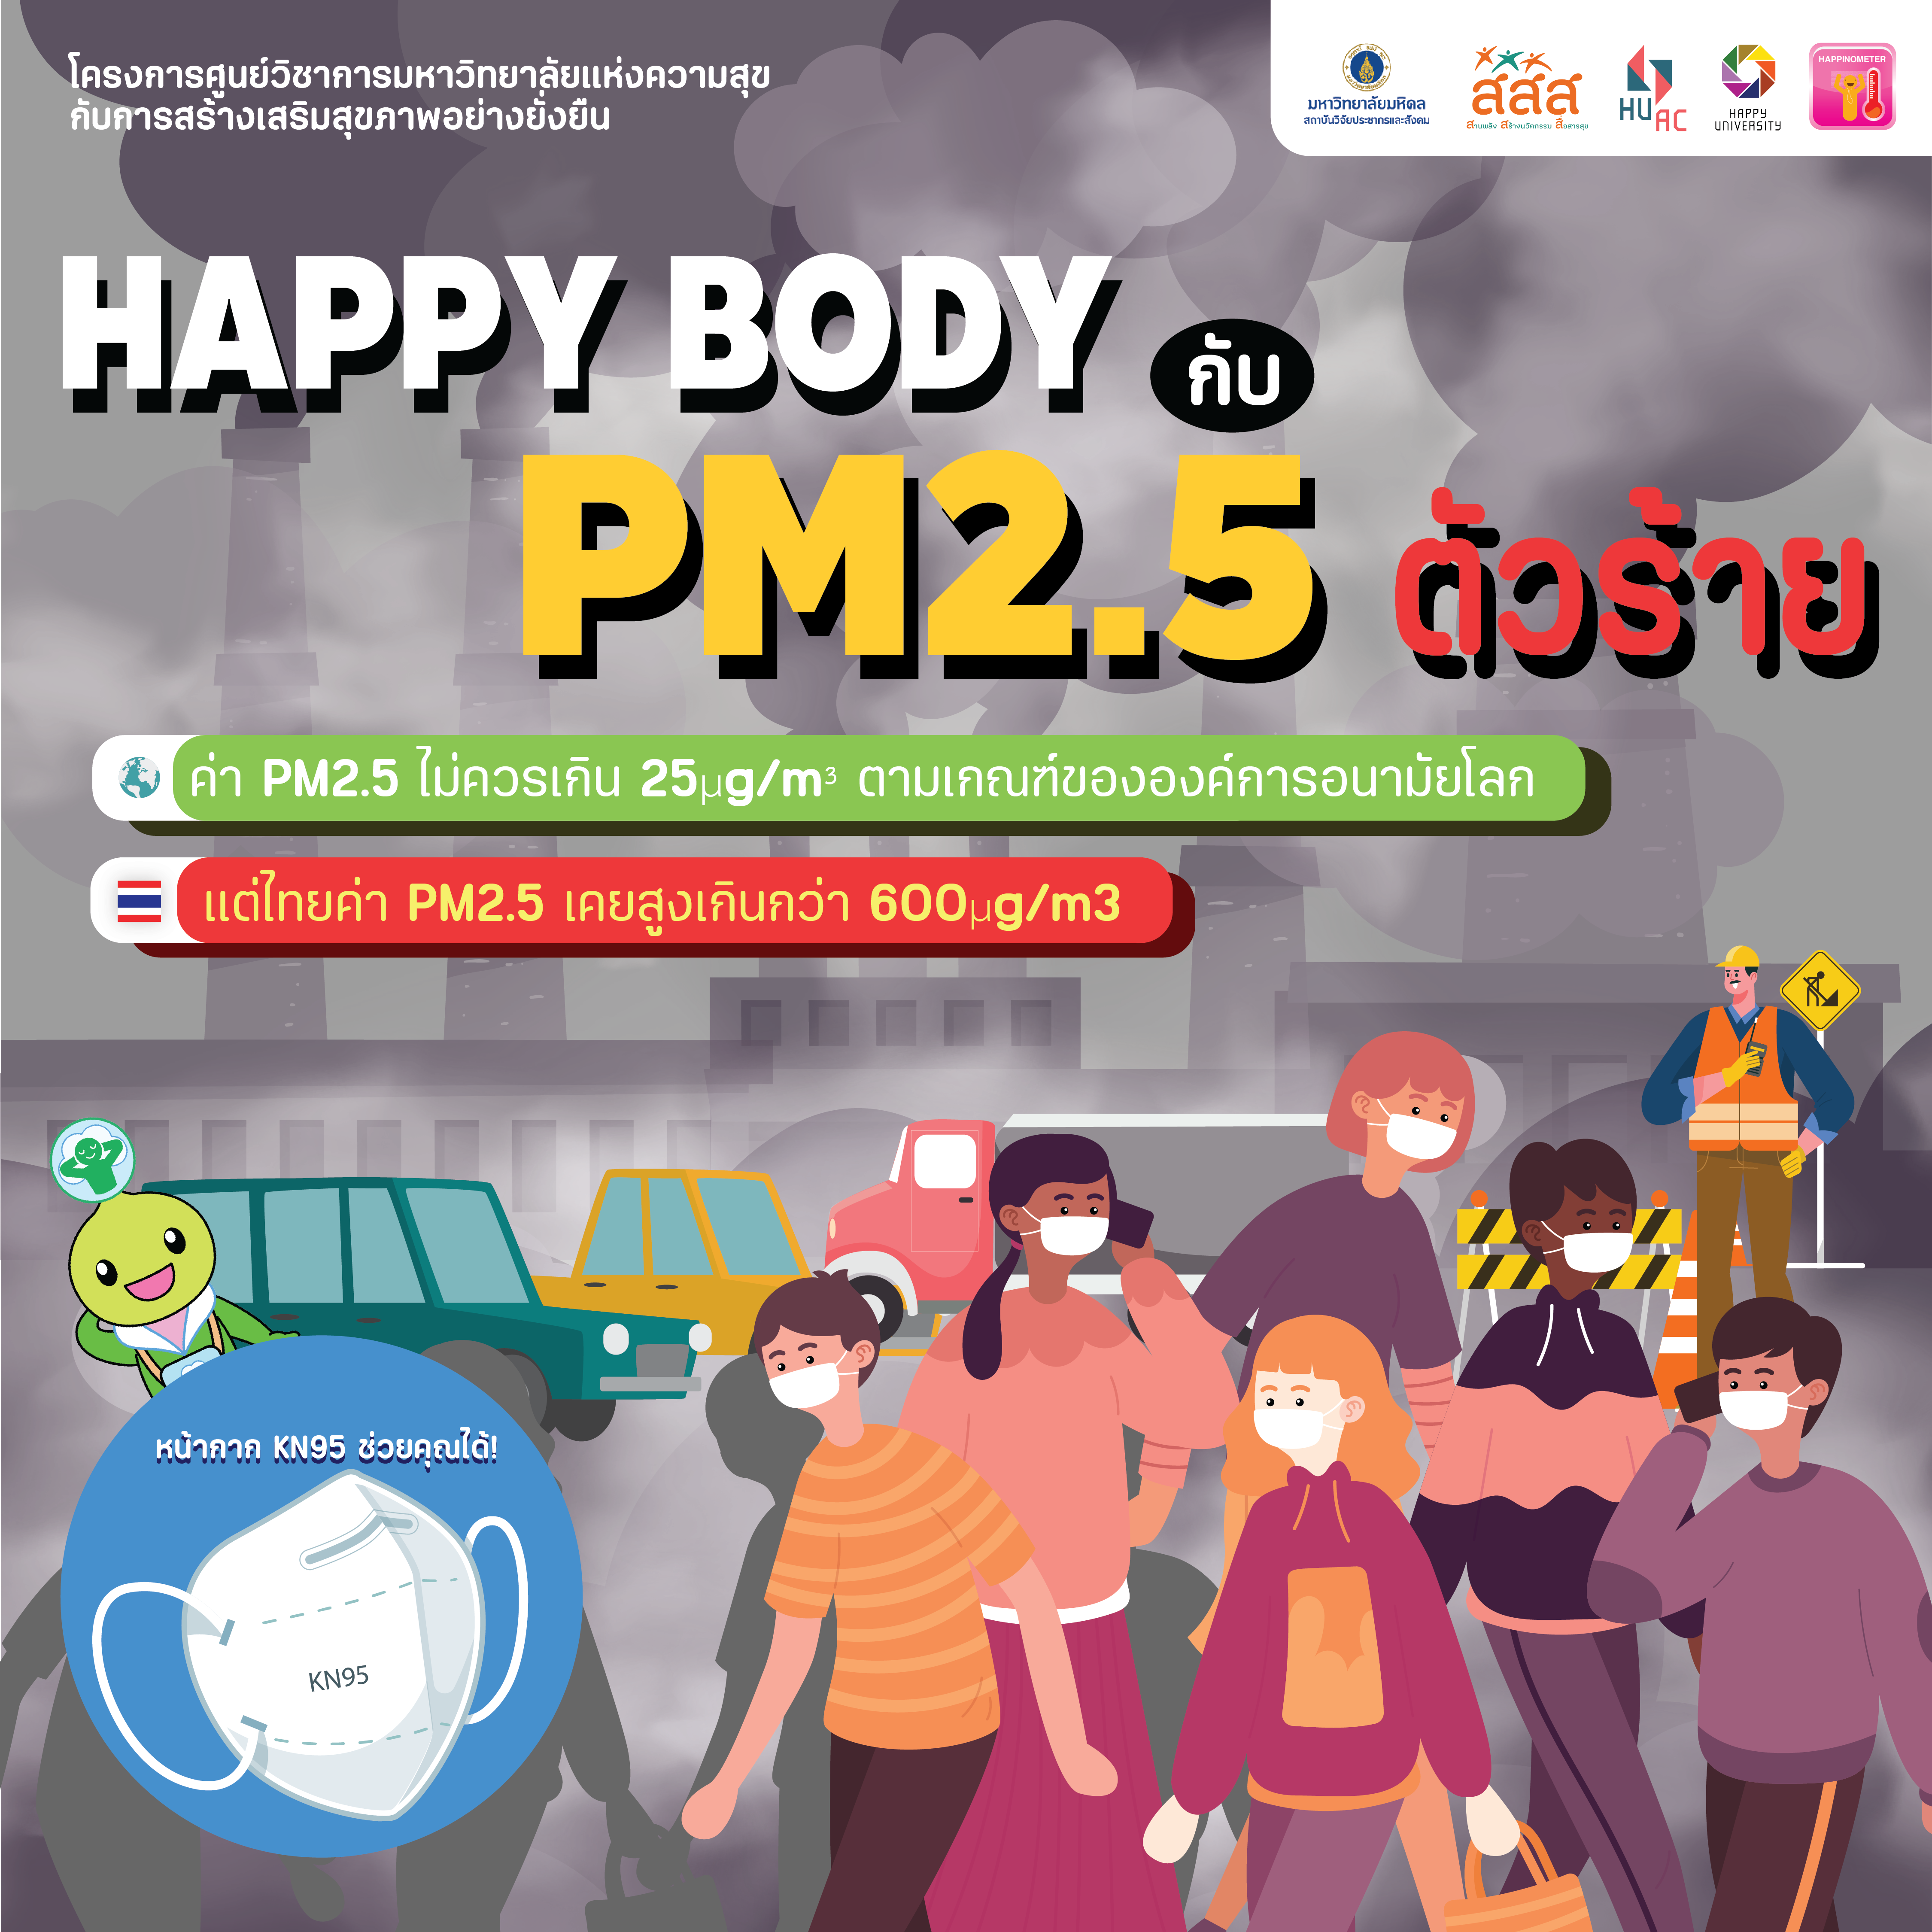 HAPPY BODY กับ PM2.5 ตัวร้าย